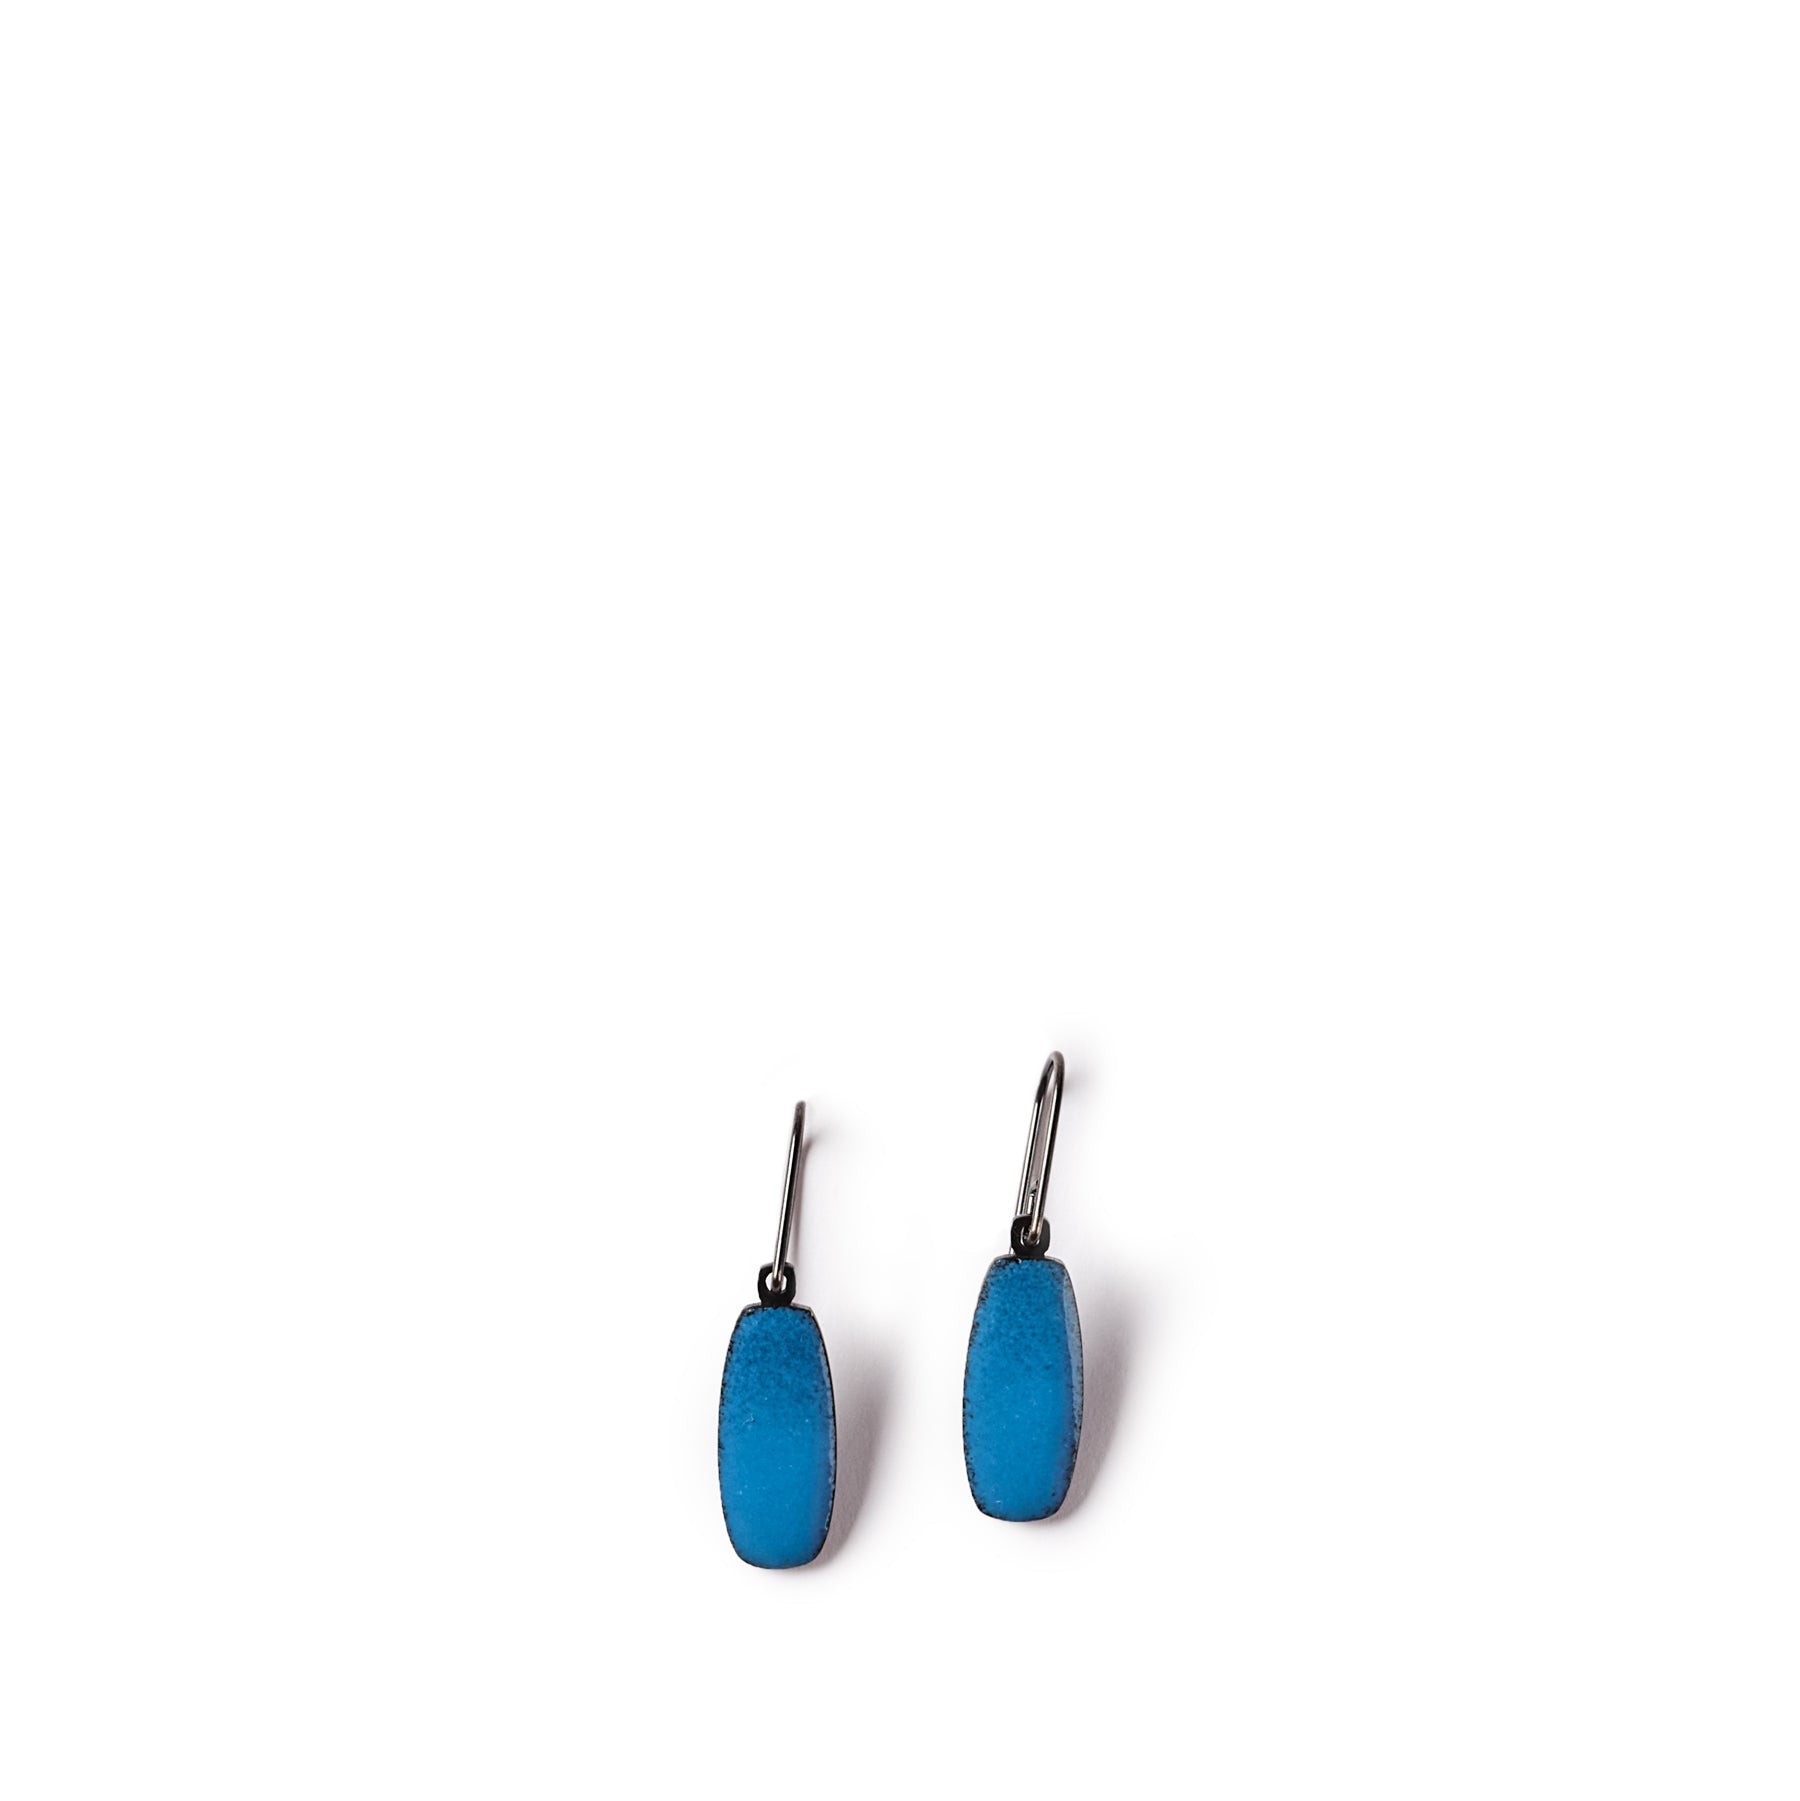 Alba Earrings in Bluebell Zoom Image 1